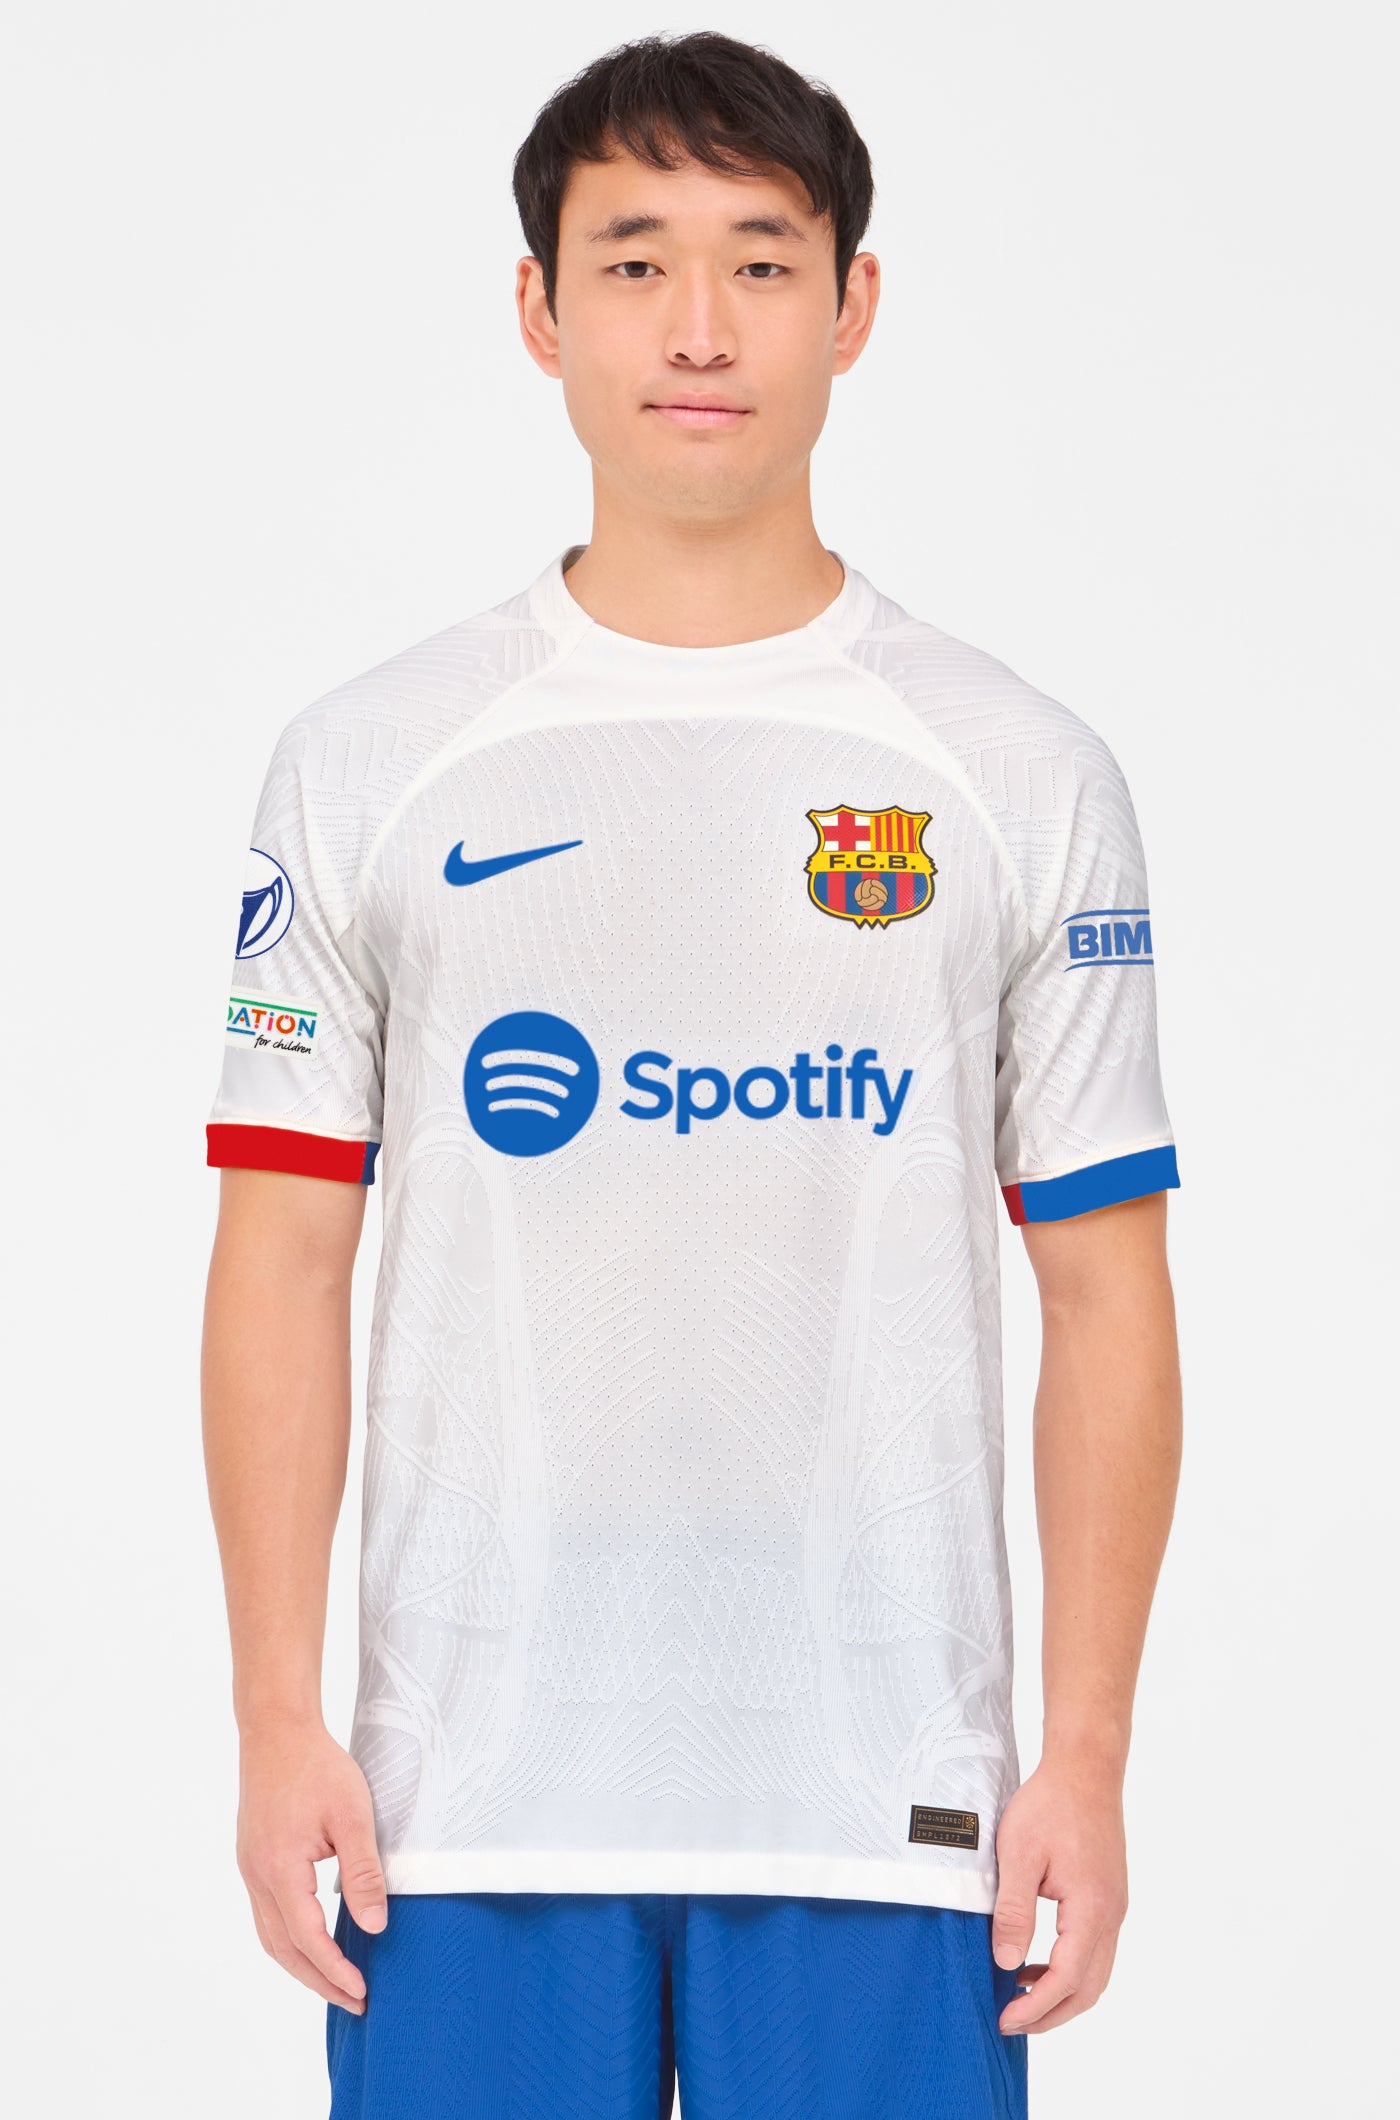 UWCL FC Barcelona away shirt 23/24 Player's Edition - PINA